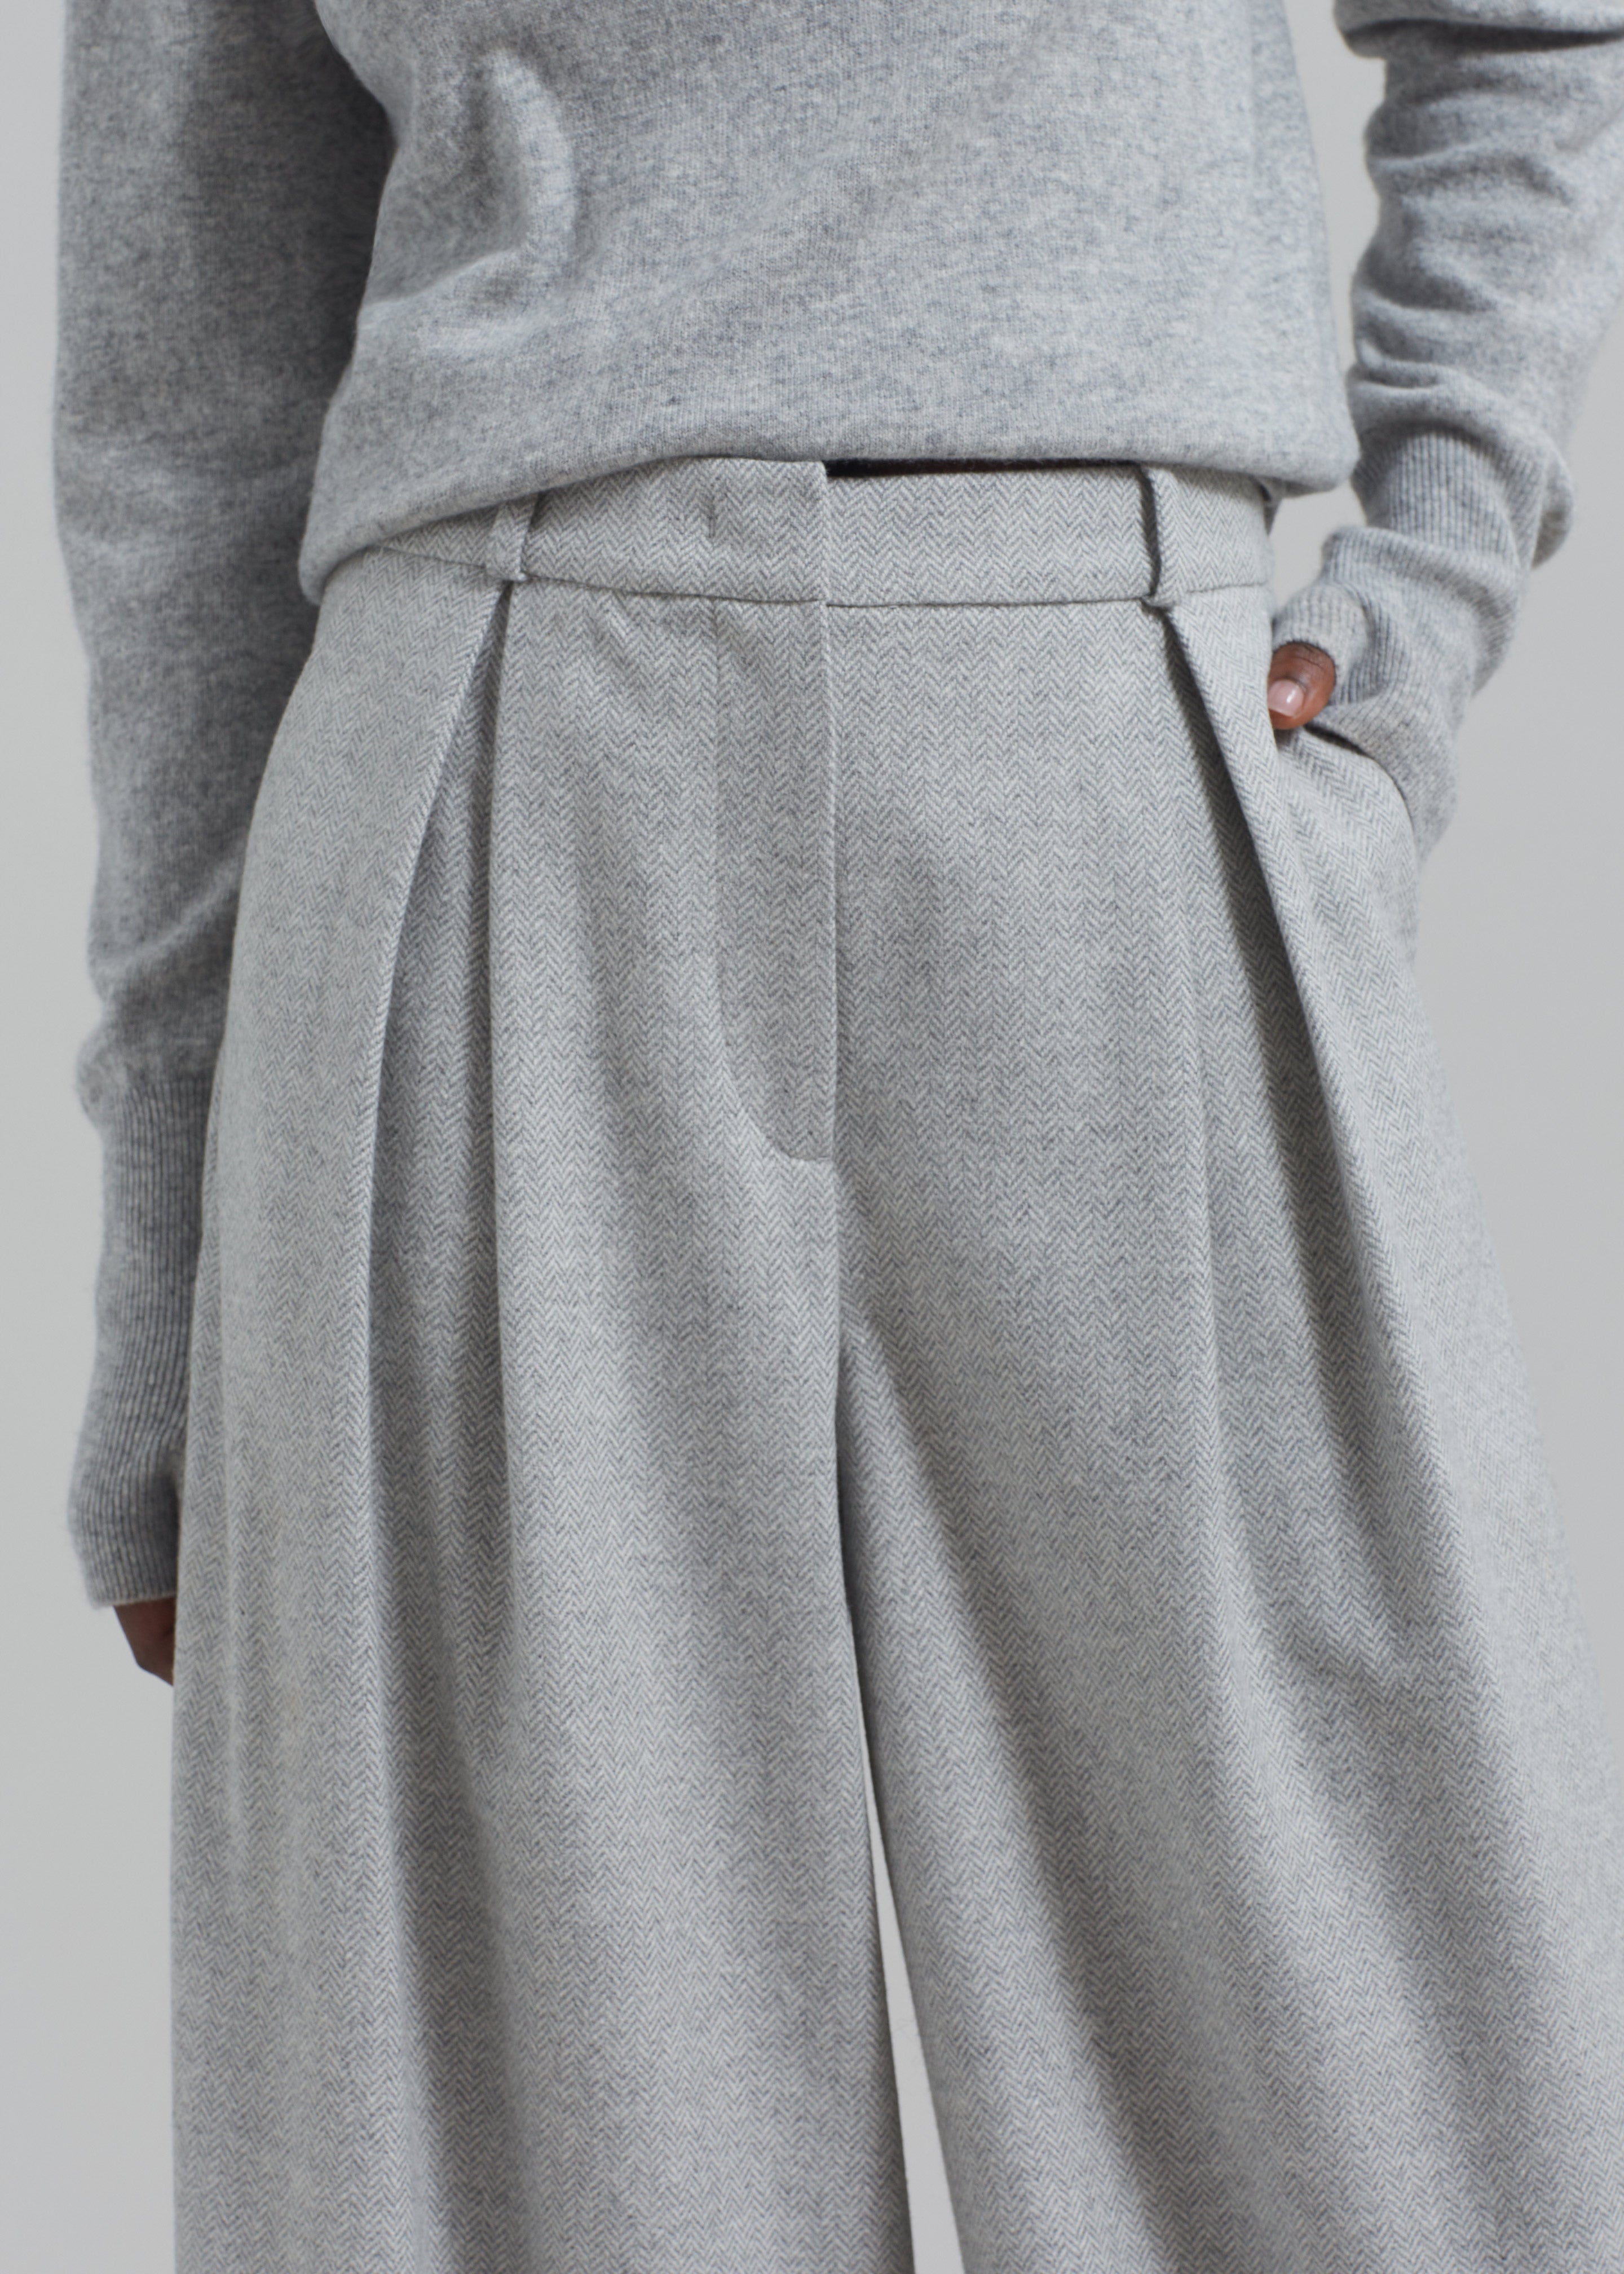 The Garment Trento Pants - Heather Grey Herringbone - 2